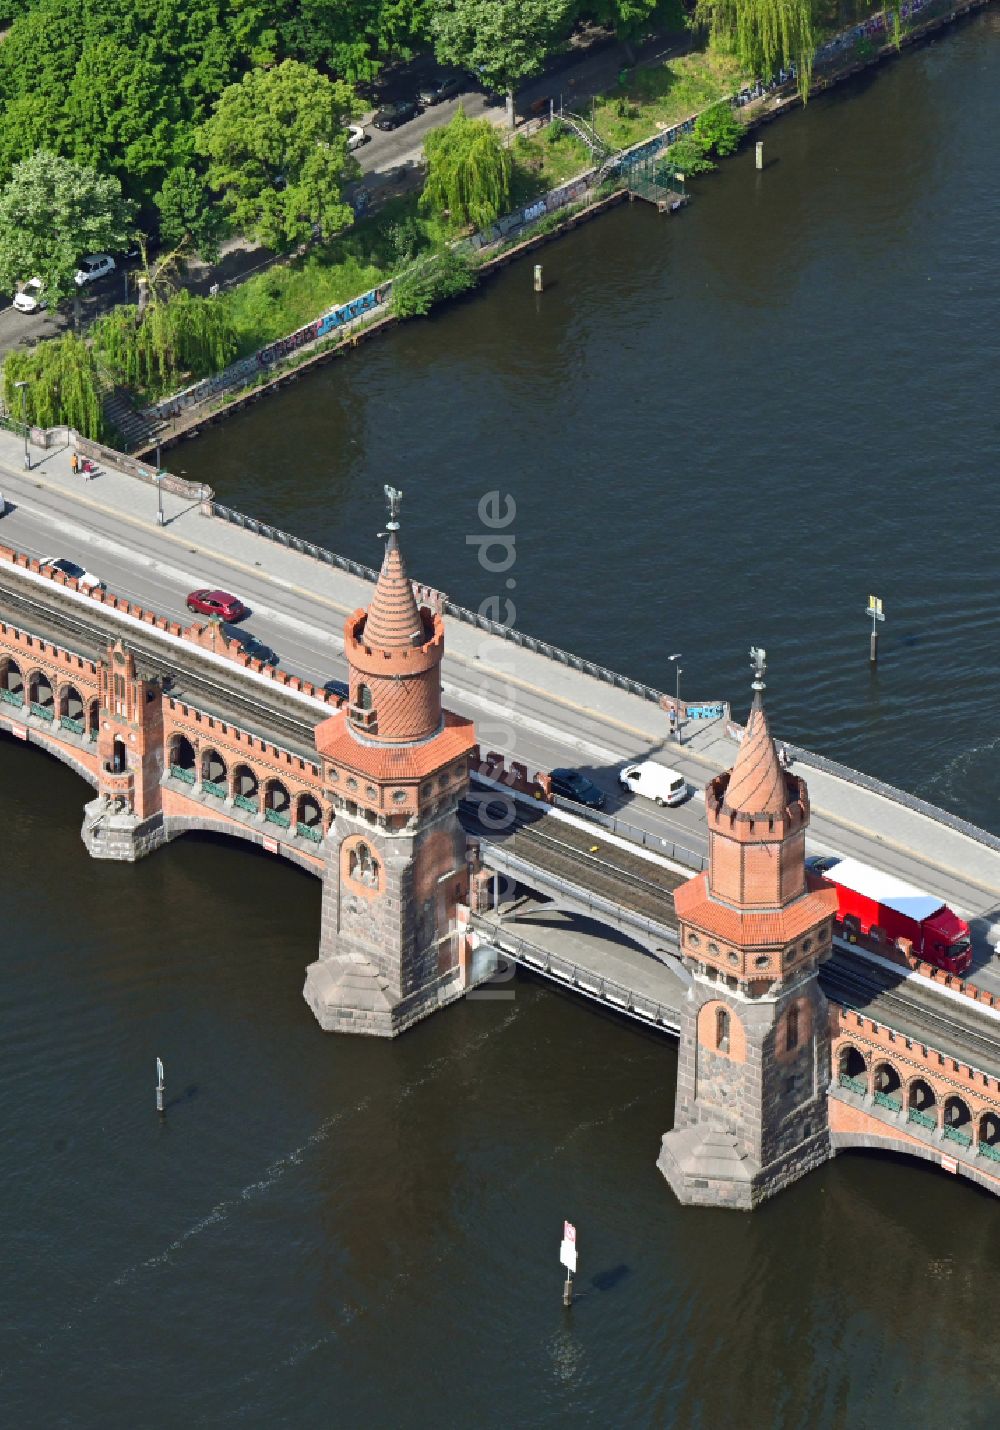 Luftbild Berlin - Flußbrücke Oberbaumbrücke in Berlin, Deutschland